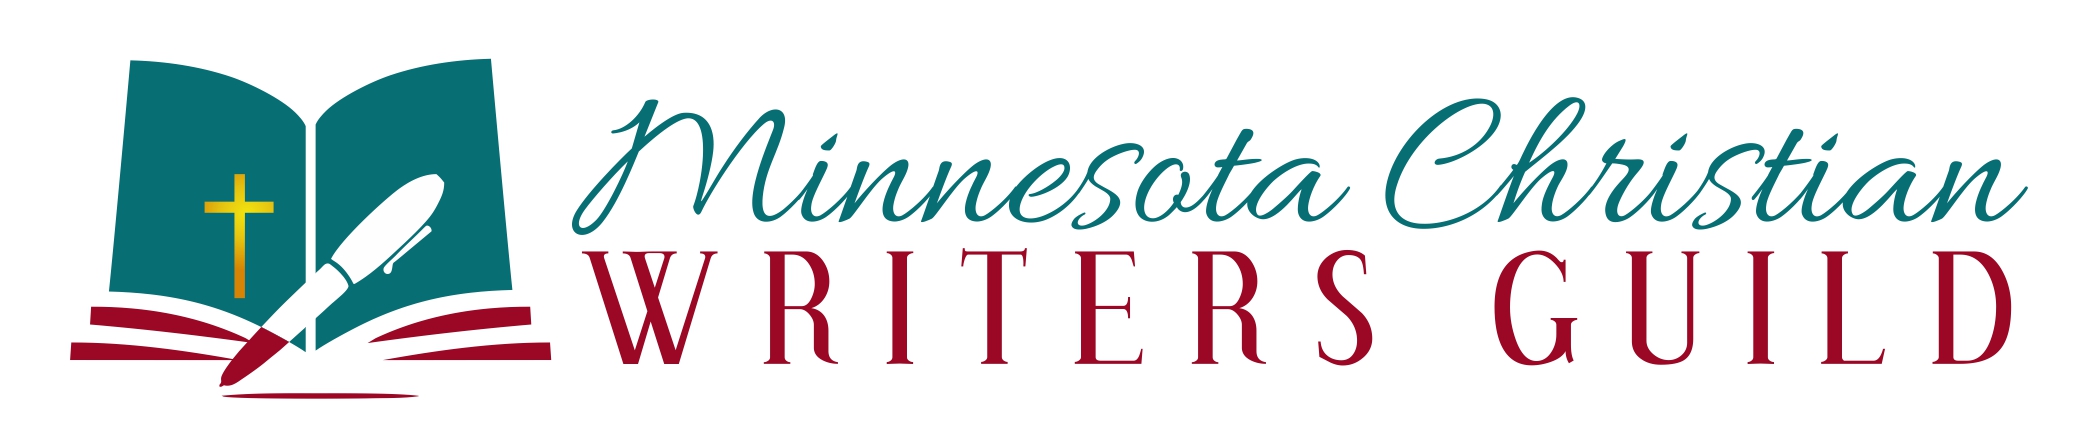 Minnesota Christian Writers Guild